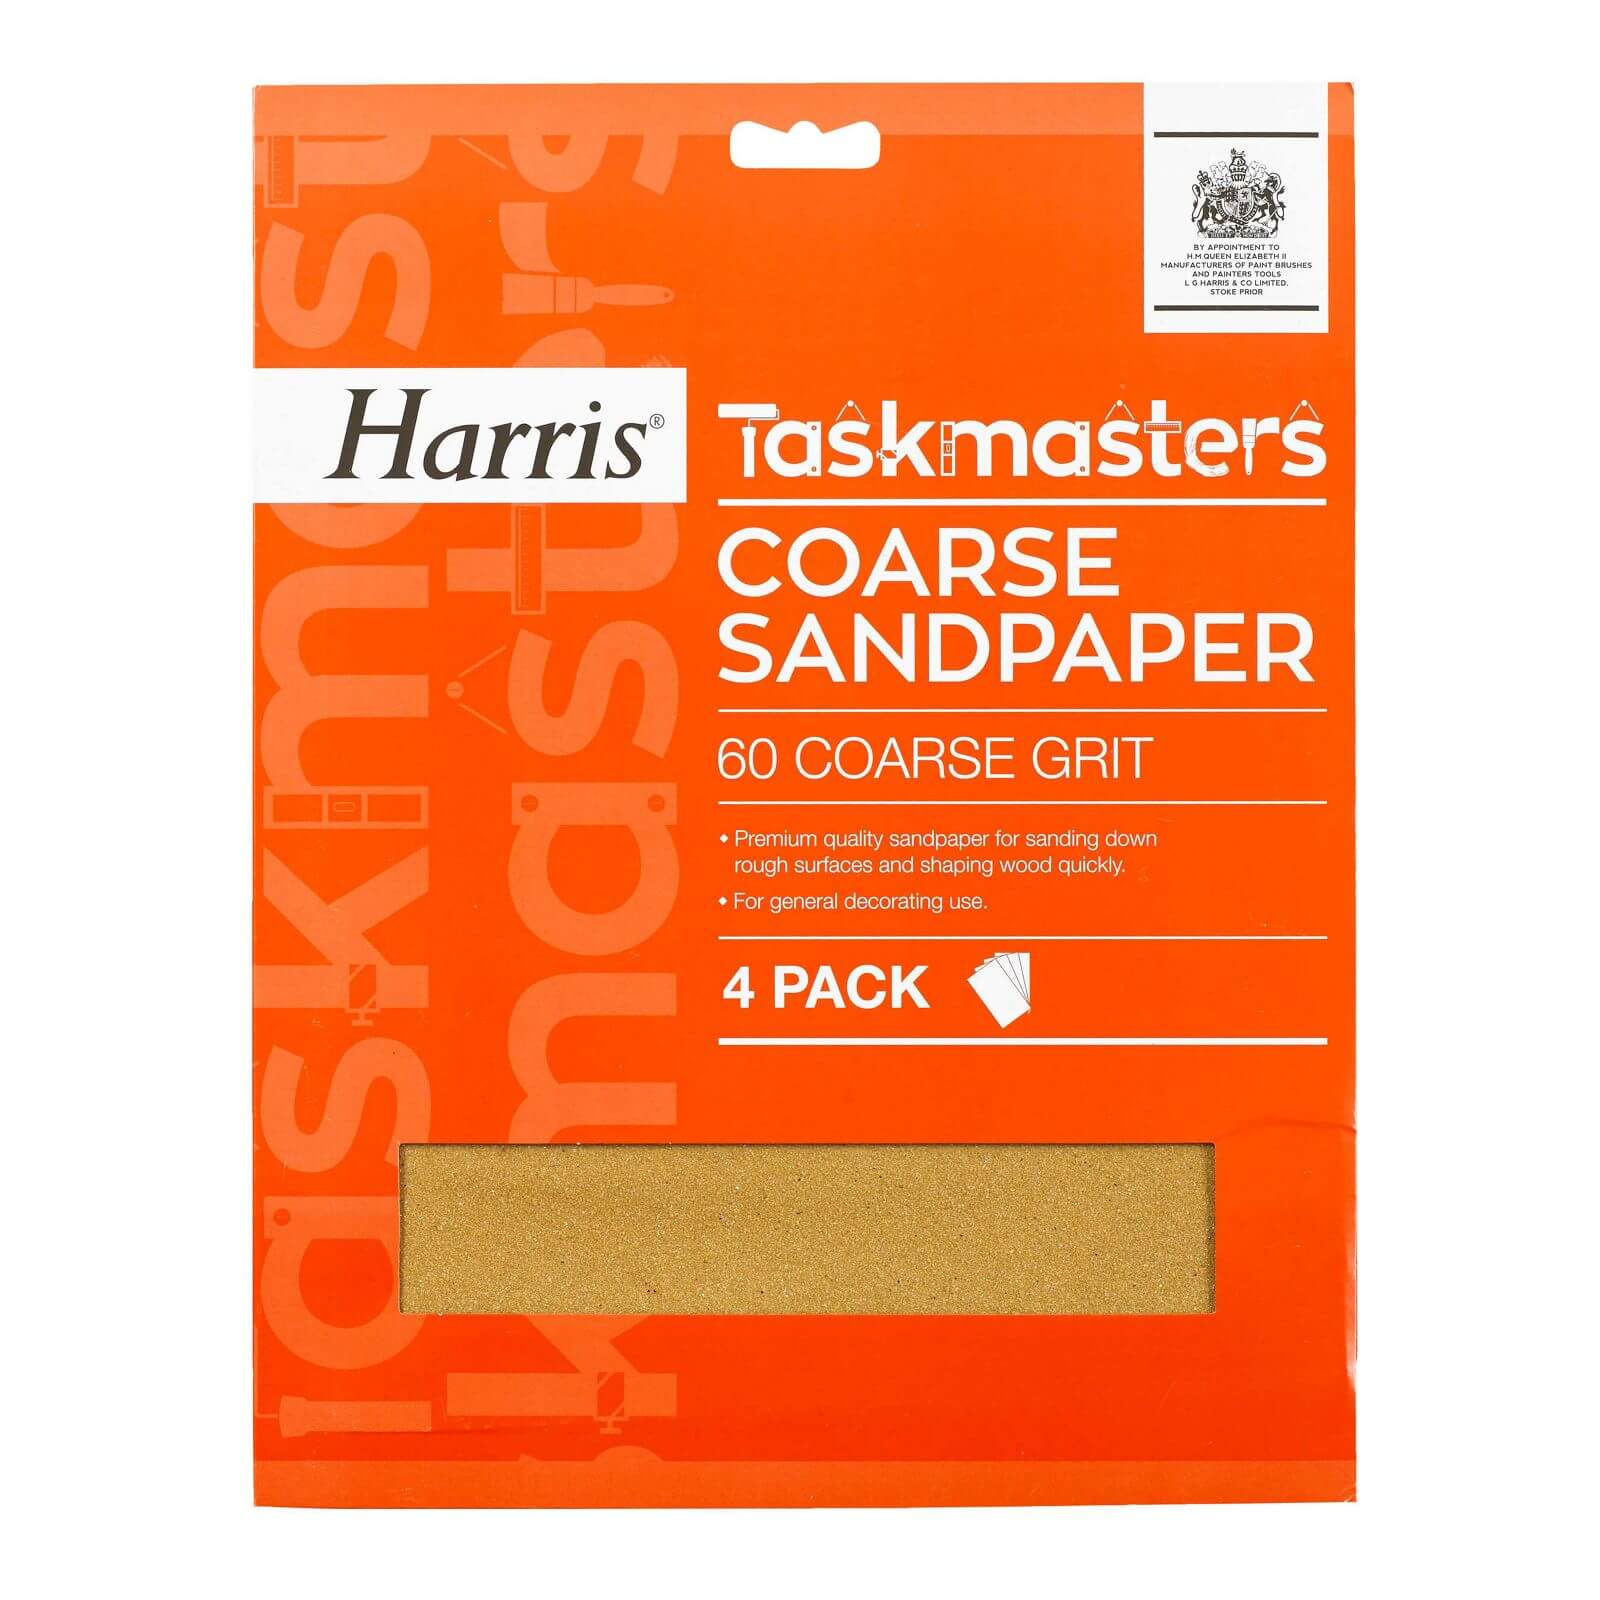 Harris Taskmasters Coarse Sandpaper - 4 Pack